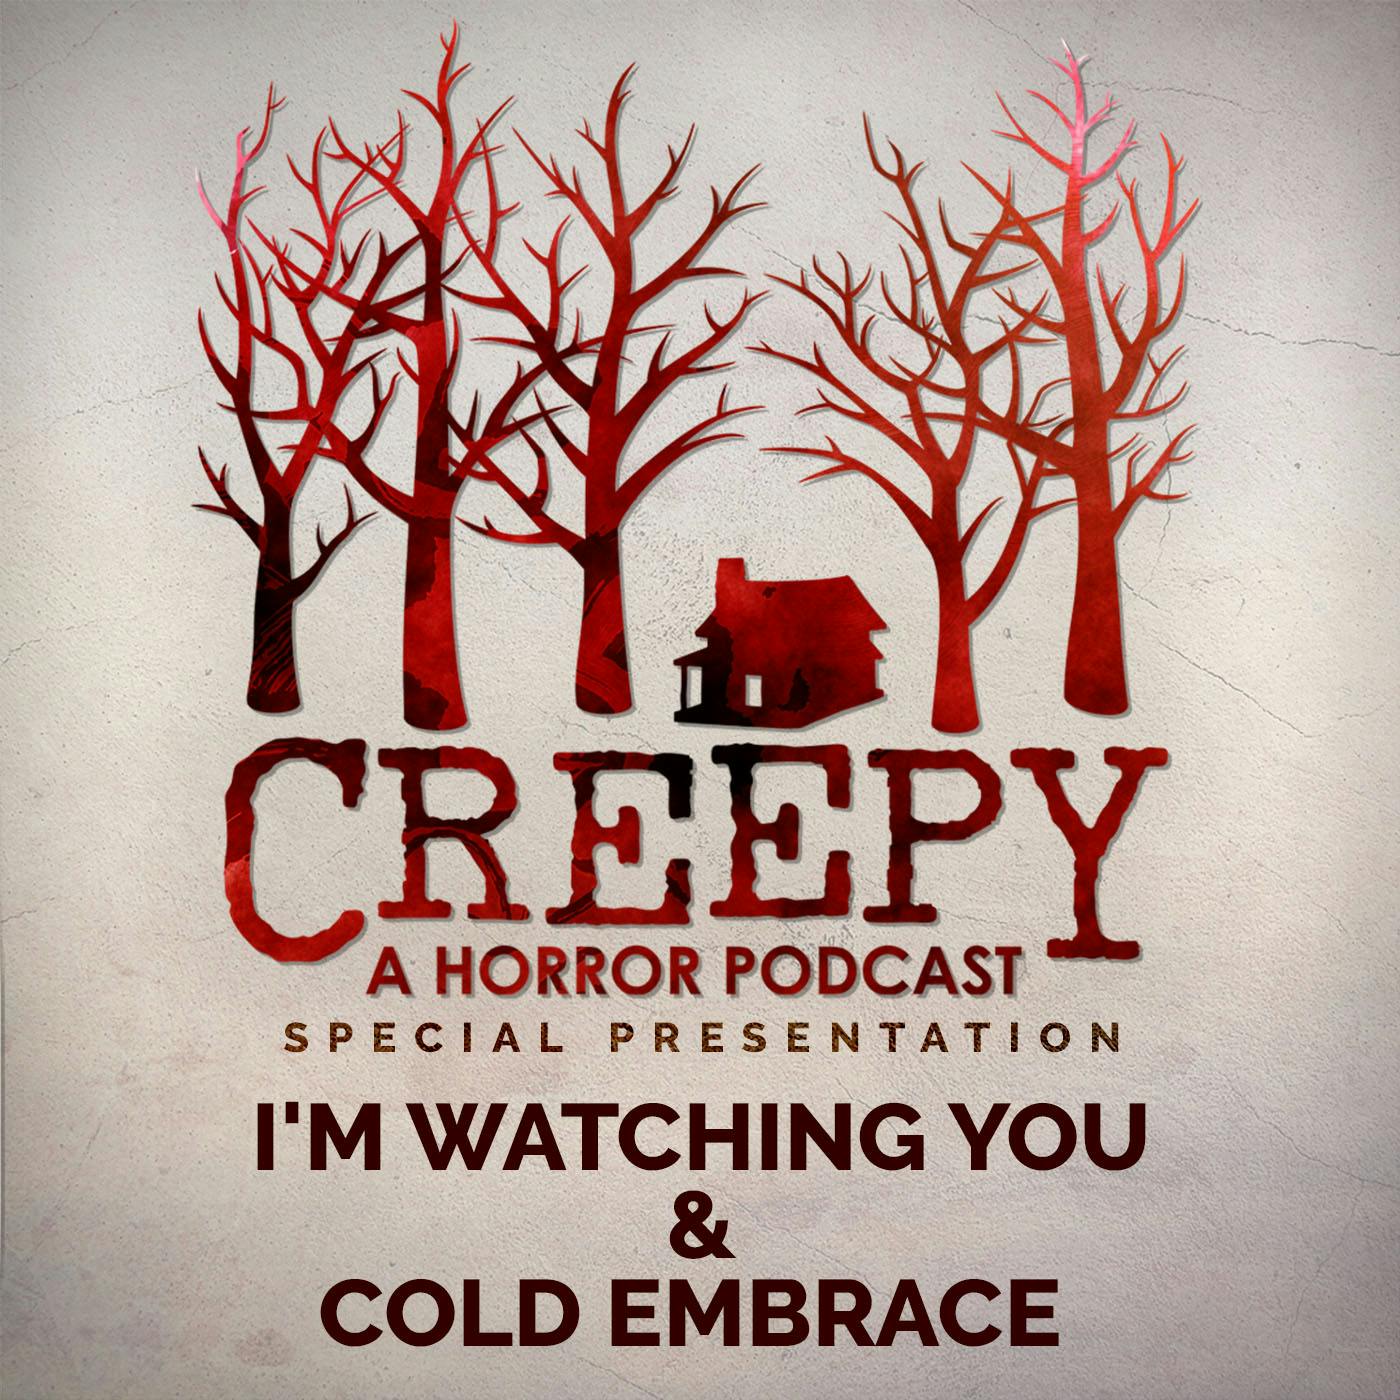 Stream Creepypasta 3 - Jeff the Killer by The Nightlight Horror Movie Club